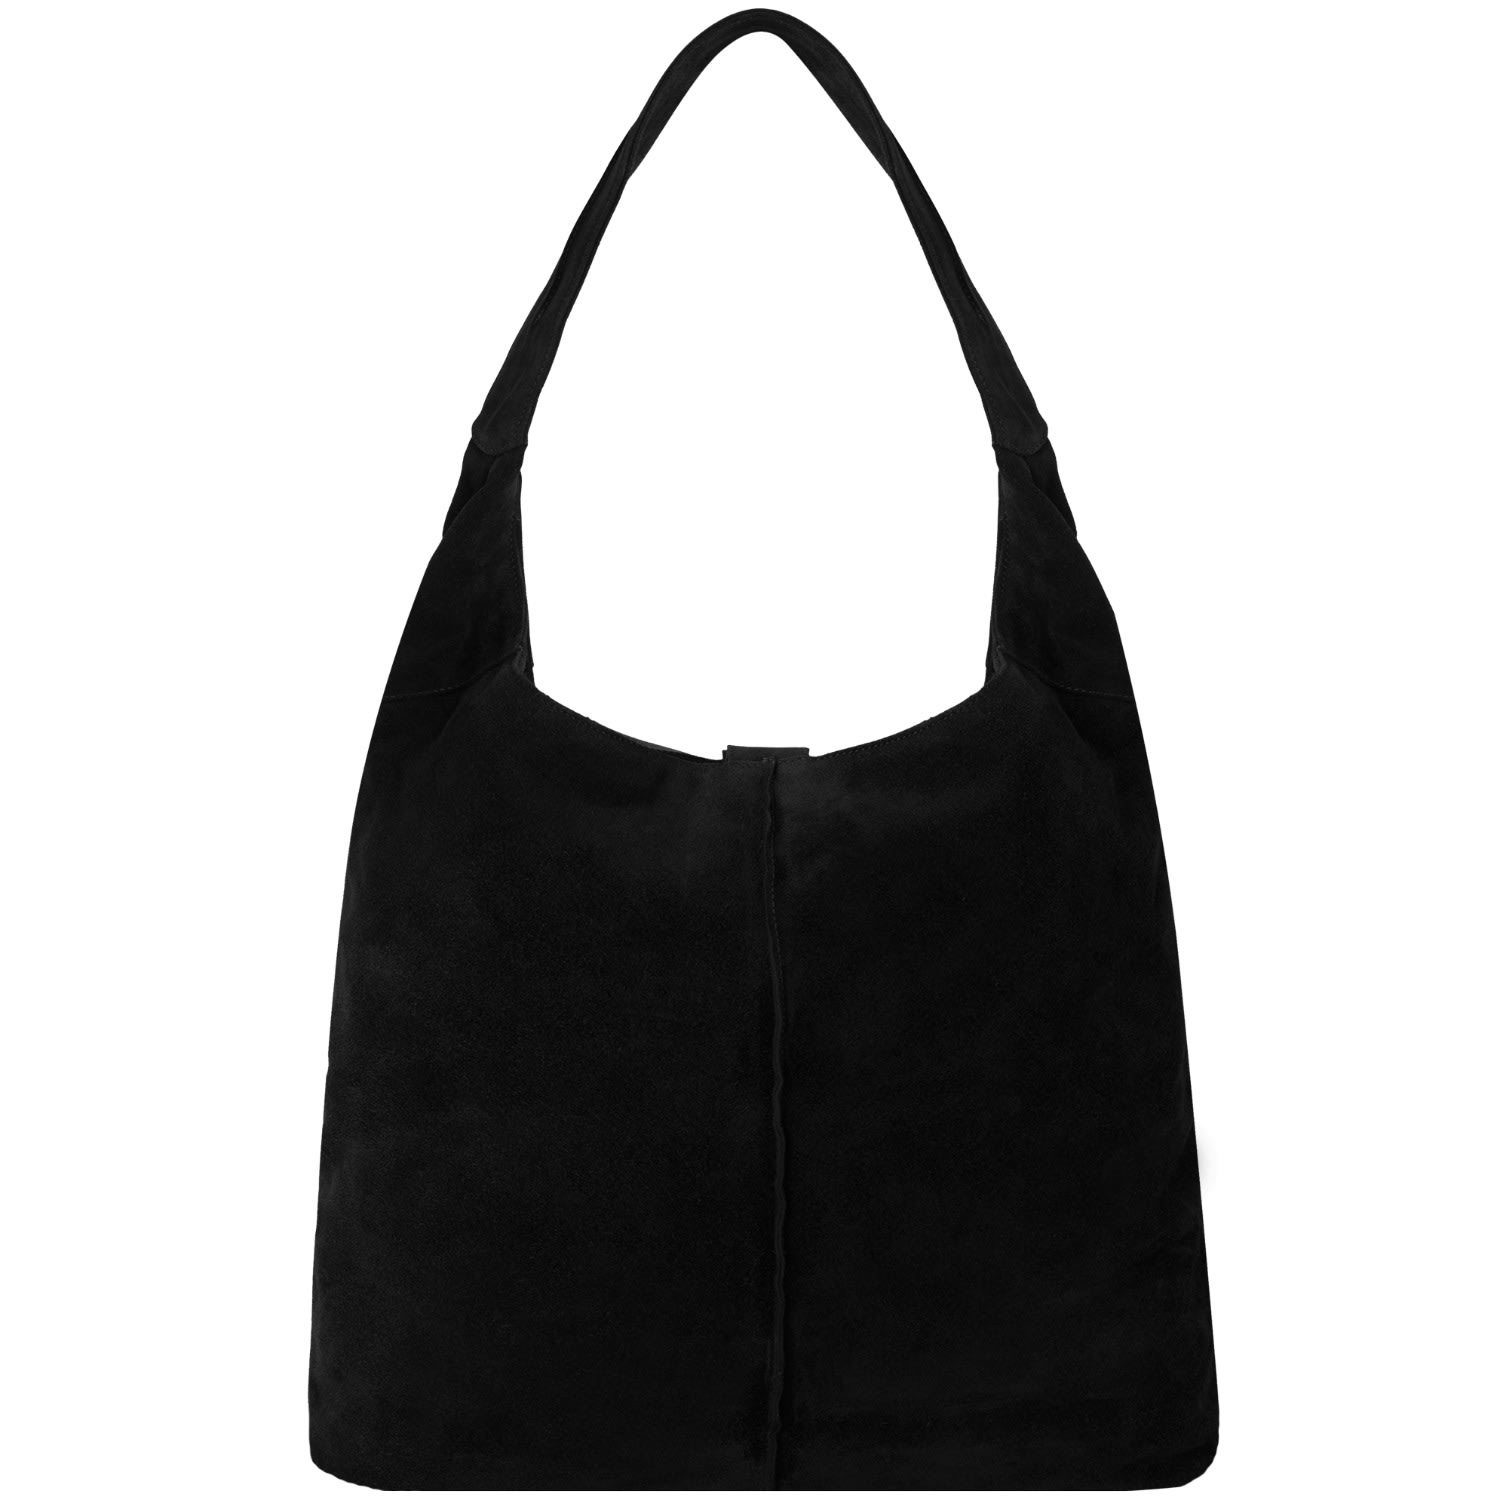 Shop Brix + Bailey Women's Black Suede Leather Hobo Shoulder Bag